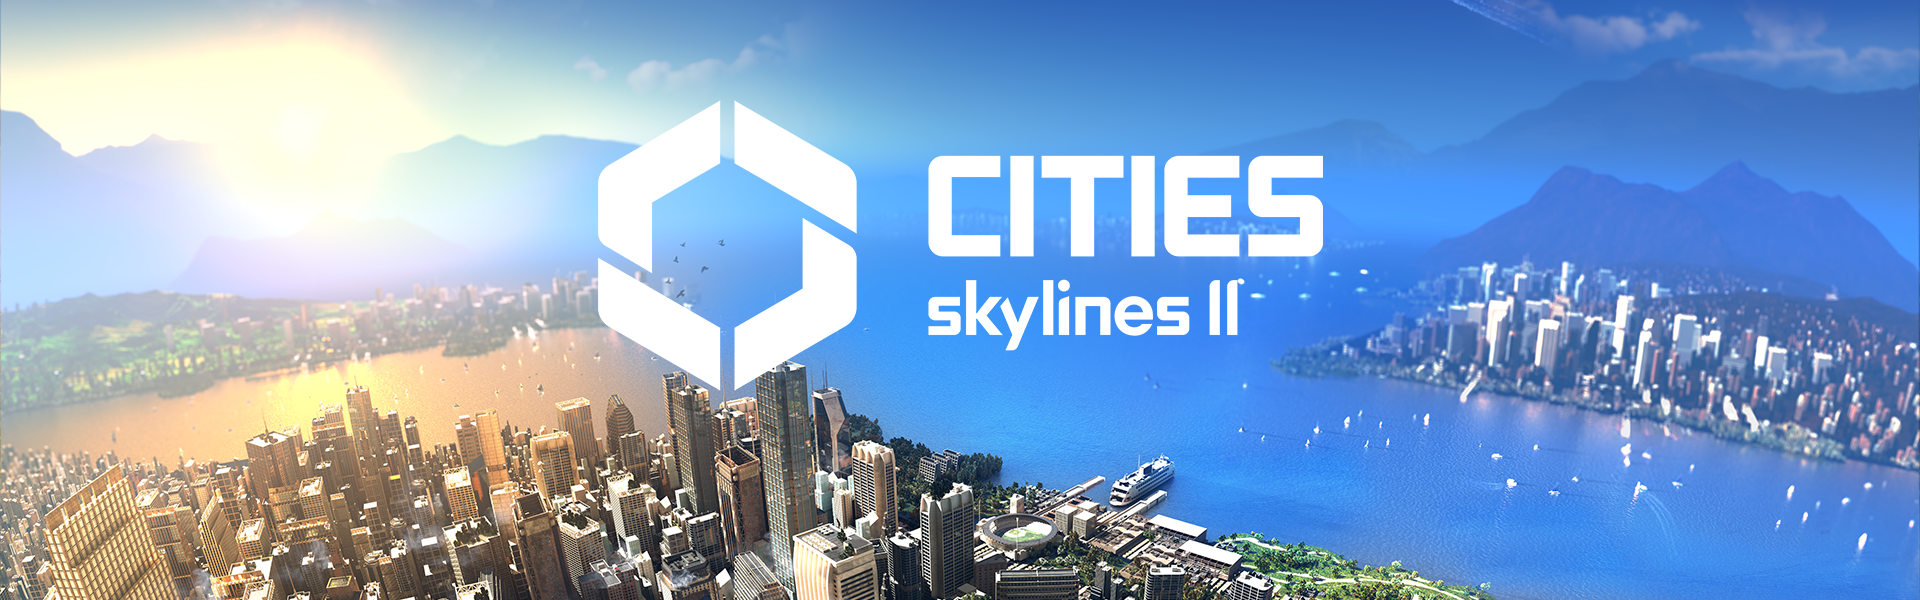 Cities Skylines 2 Trailer